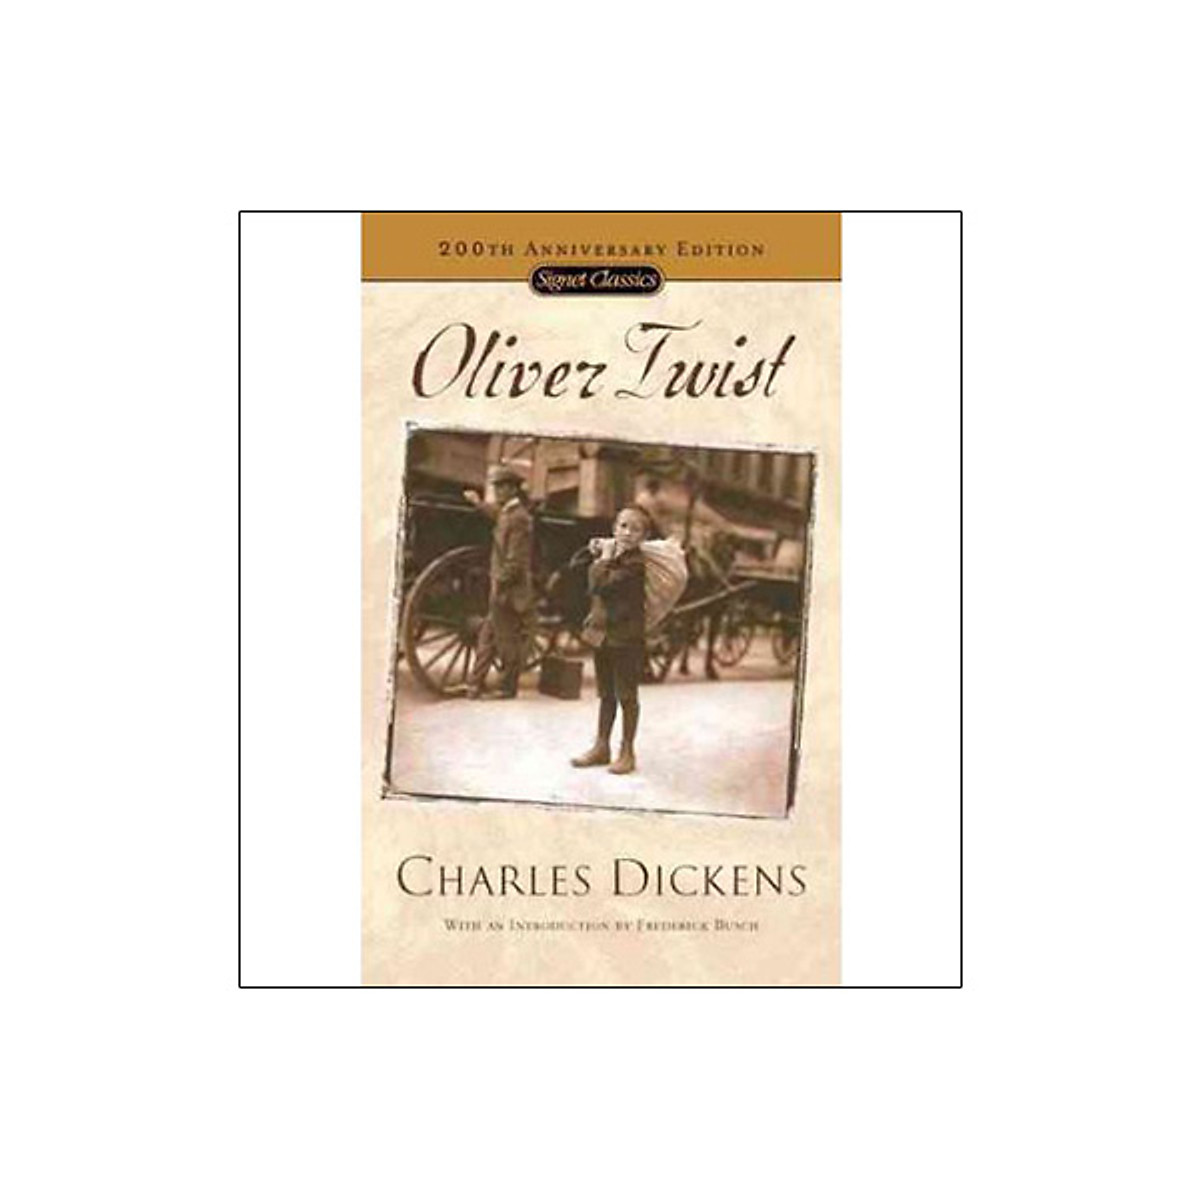 Oliver Twist (Signet Classic - 200th Anniversary Edition)